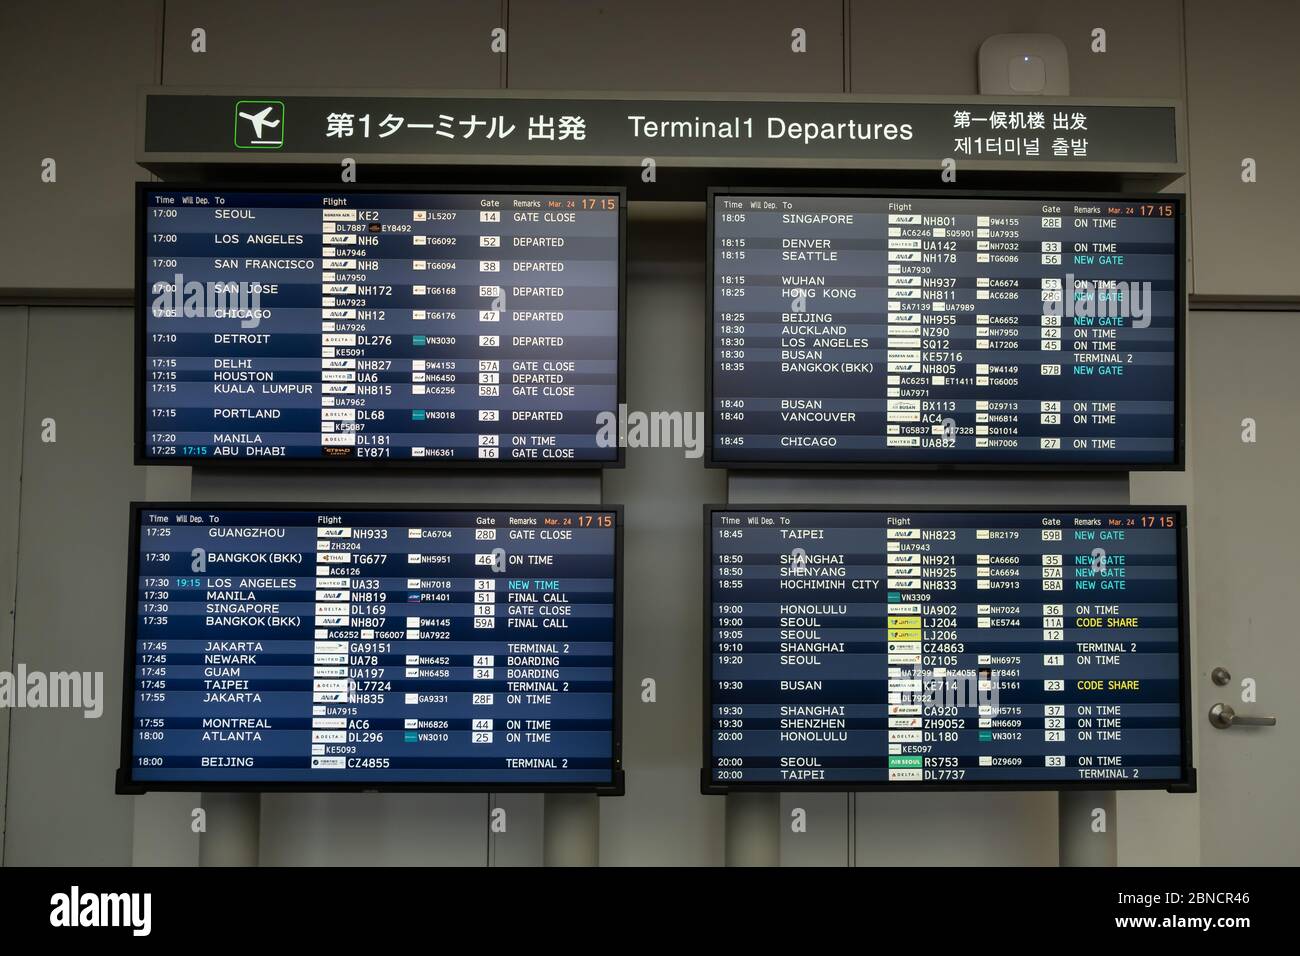 Chiba, Japan - March 24, 2019: View of Flight schedule information boards at Narita International Airport, Chiba, Japan. Stock Photo